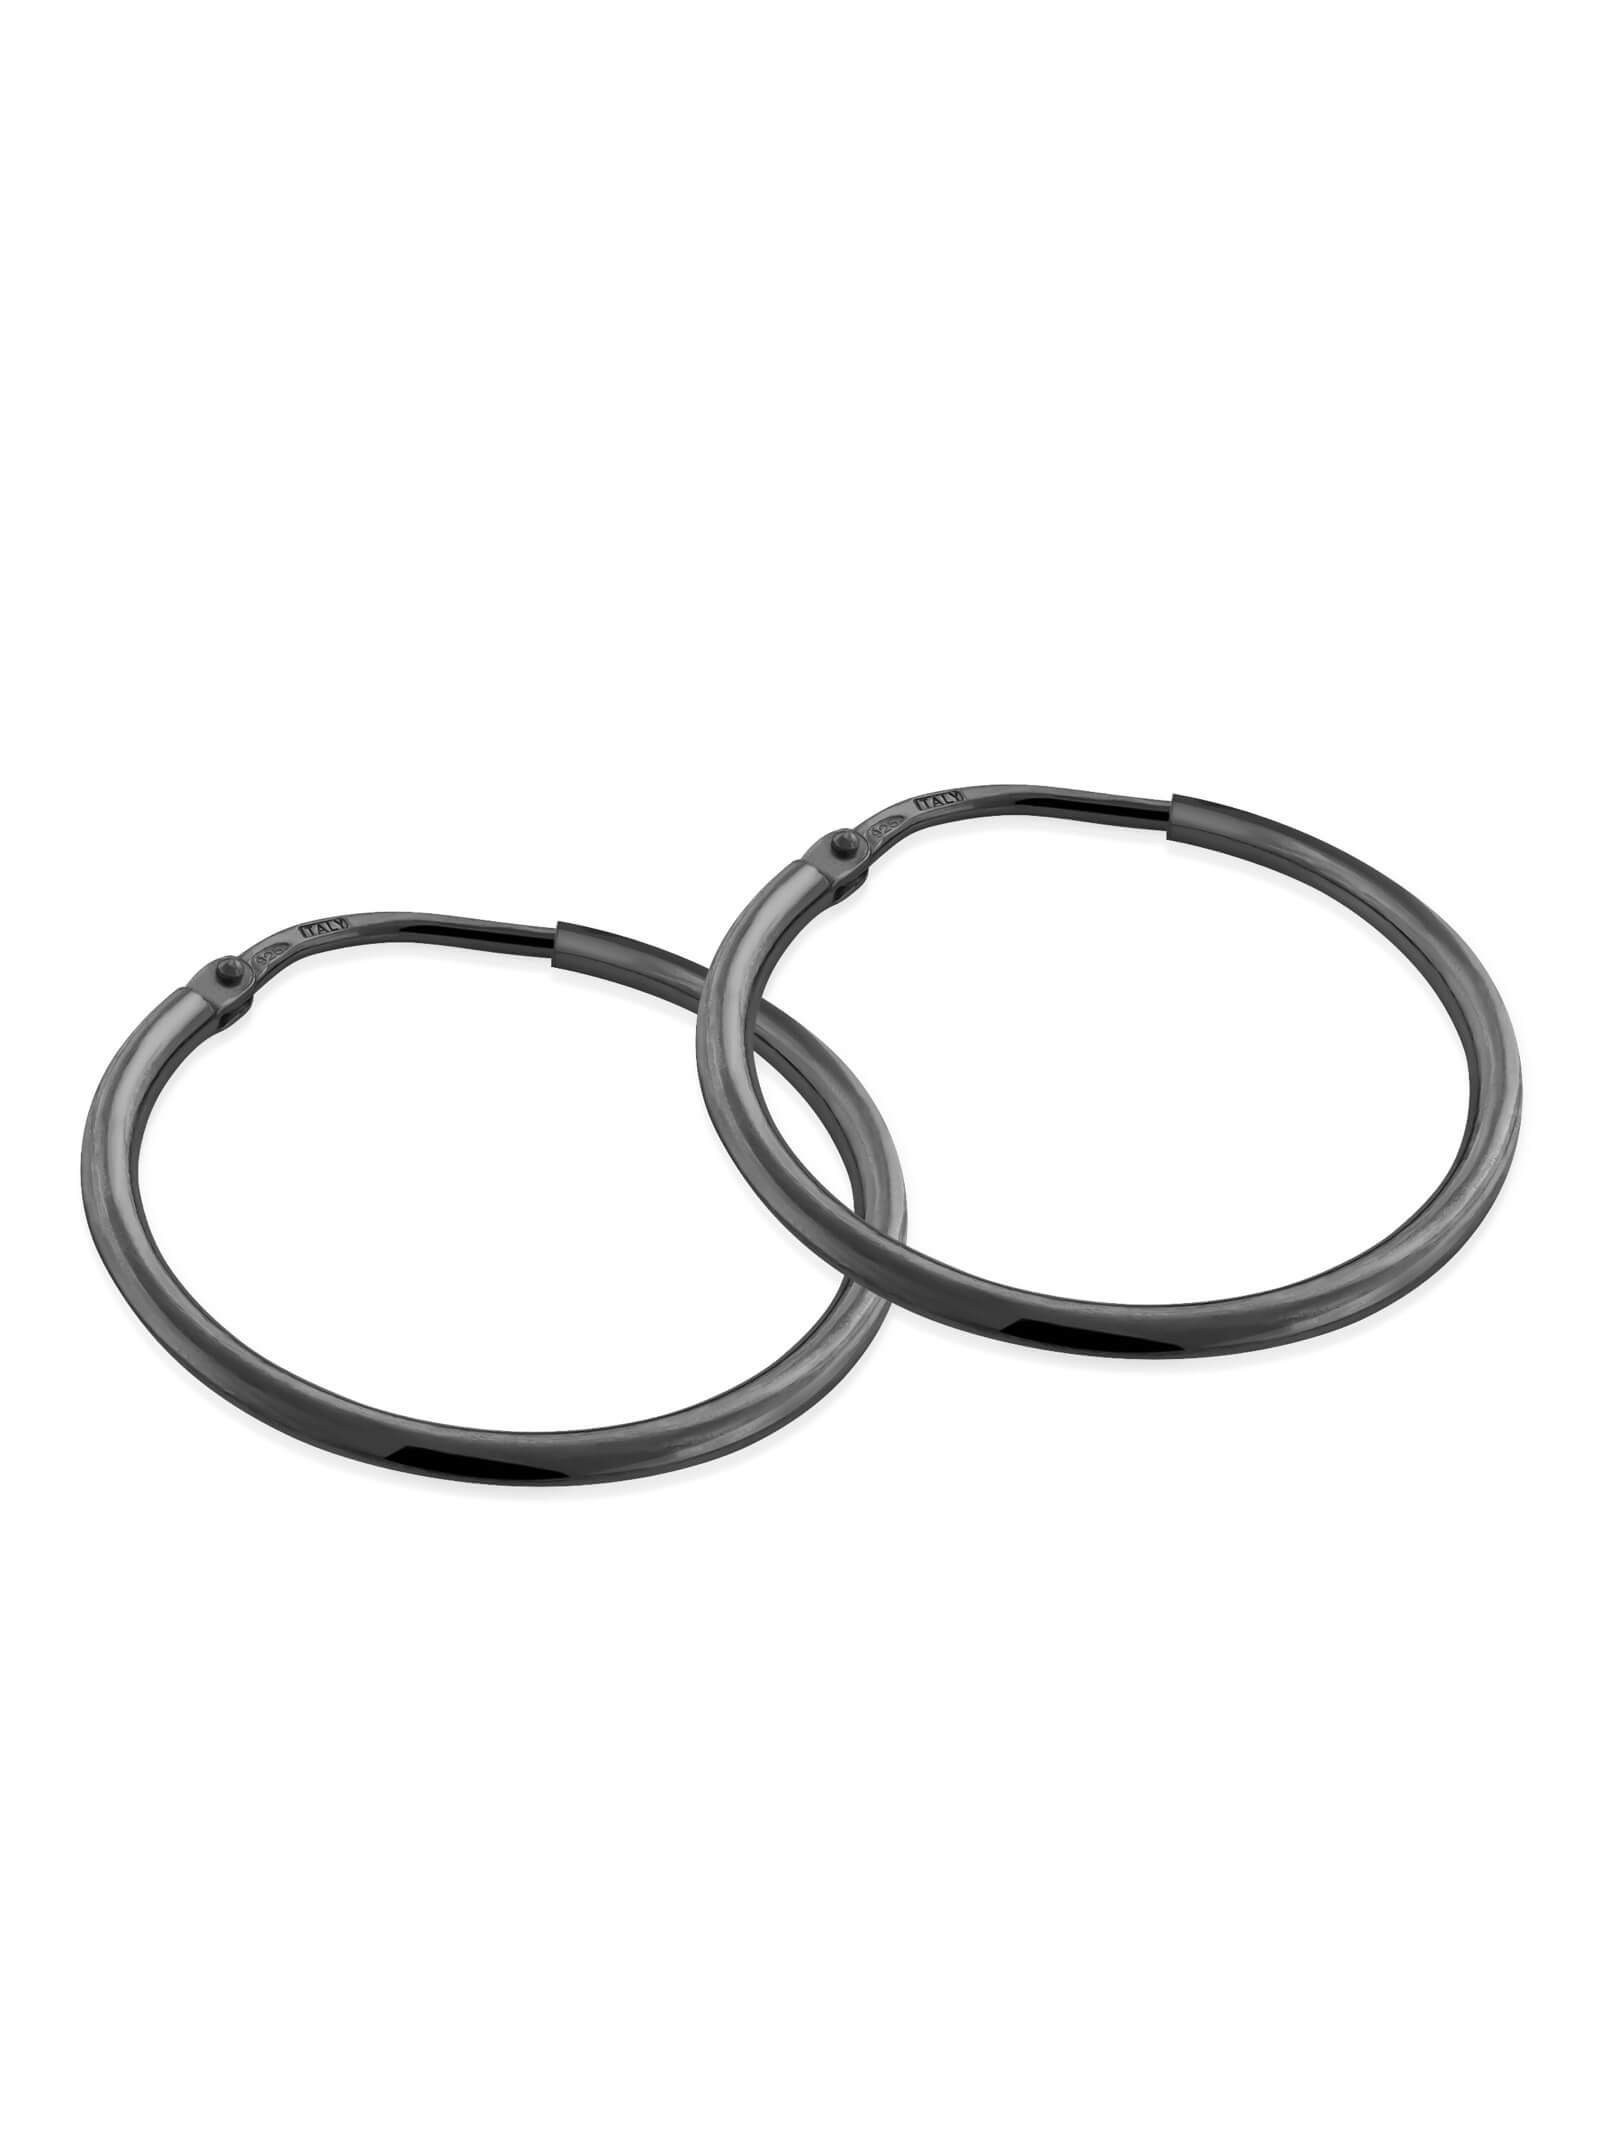 Schwarz 2cm, Silber ORBIT Kreis Paar Creolen modabilé Rhodiniert, Ohrringe Kreolen kreisförmig, rund 20mm 925, Damen